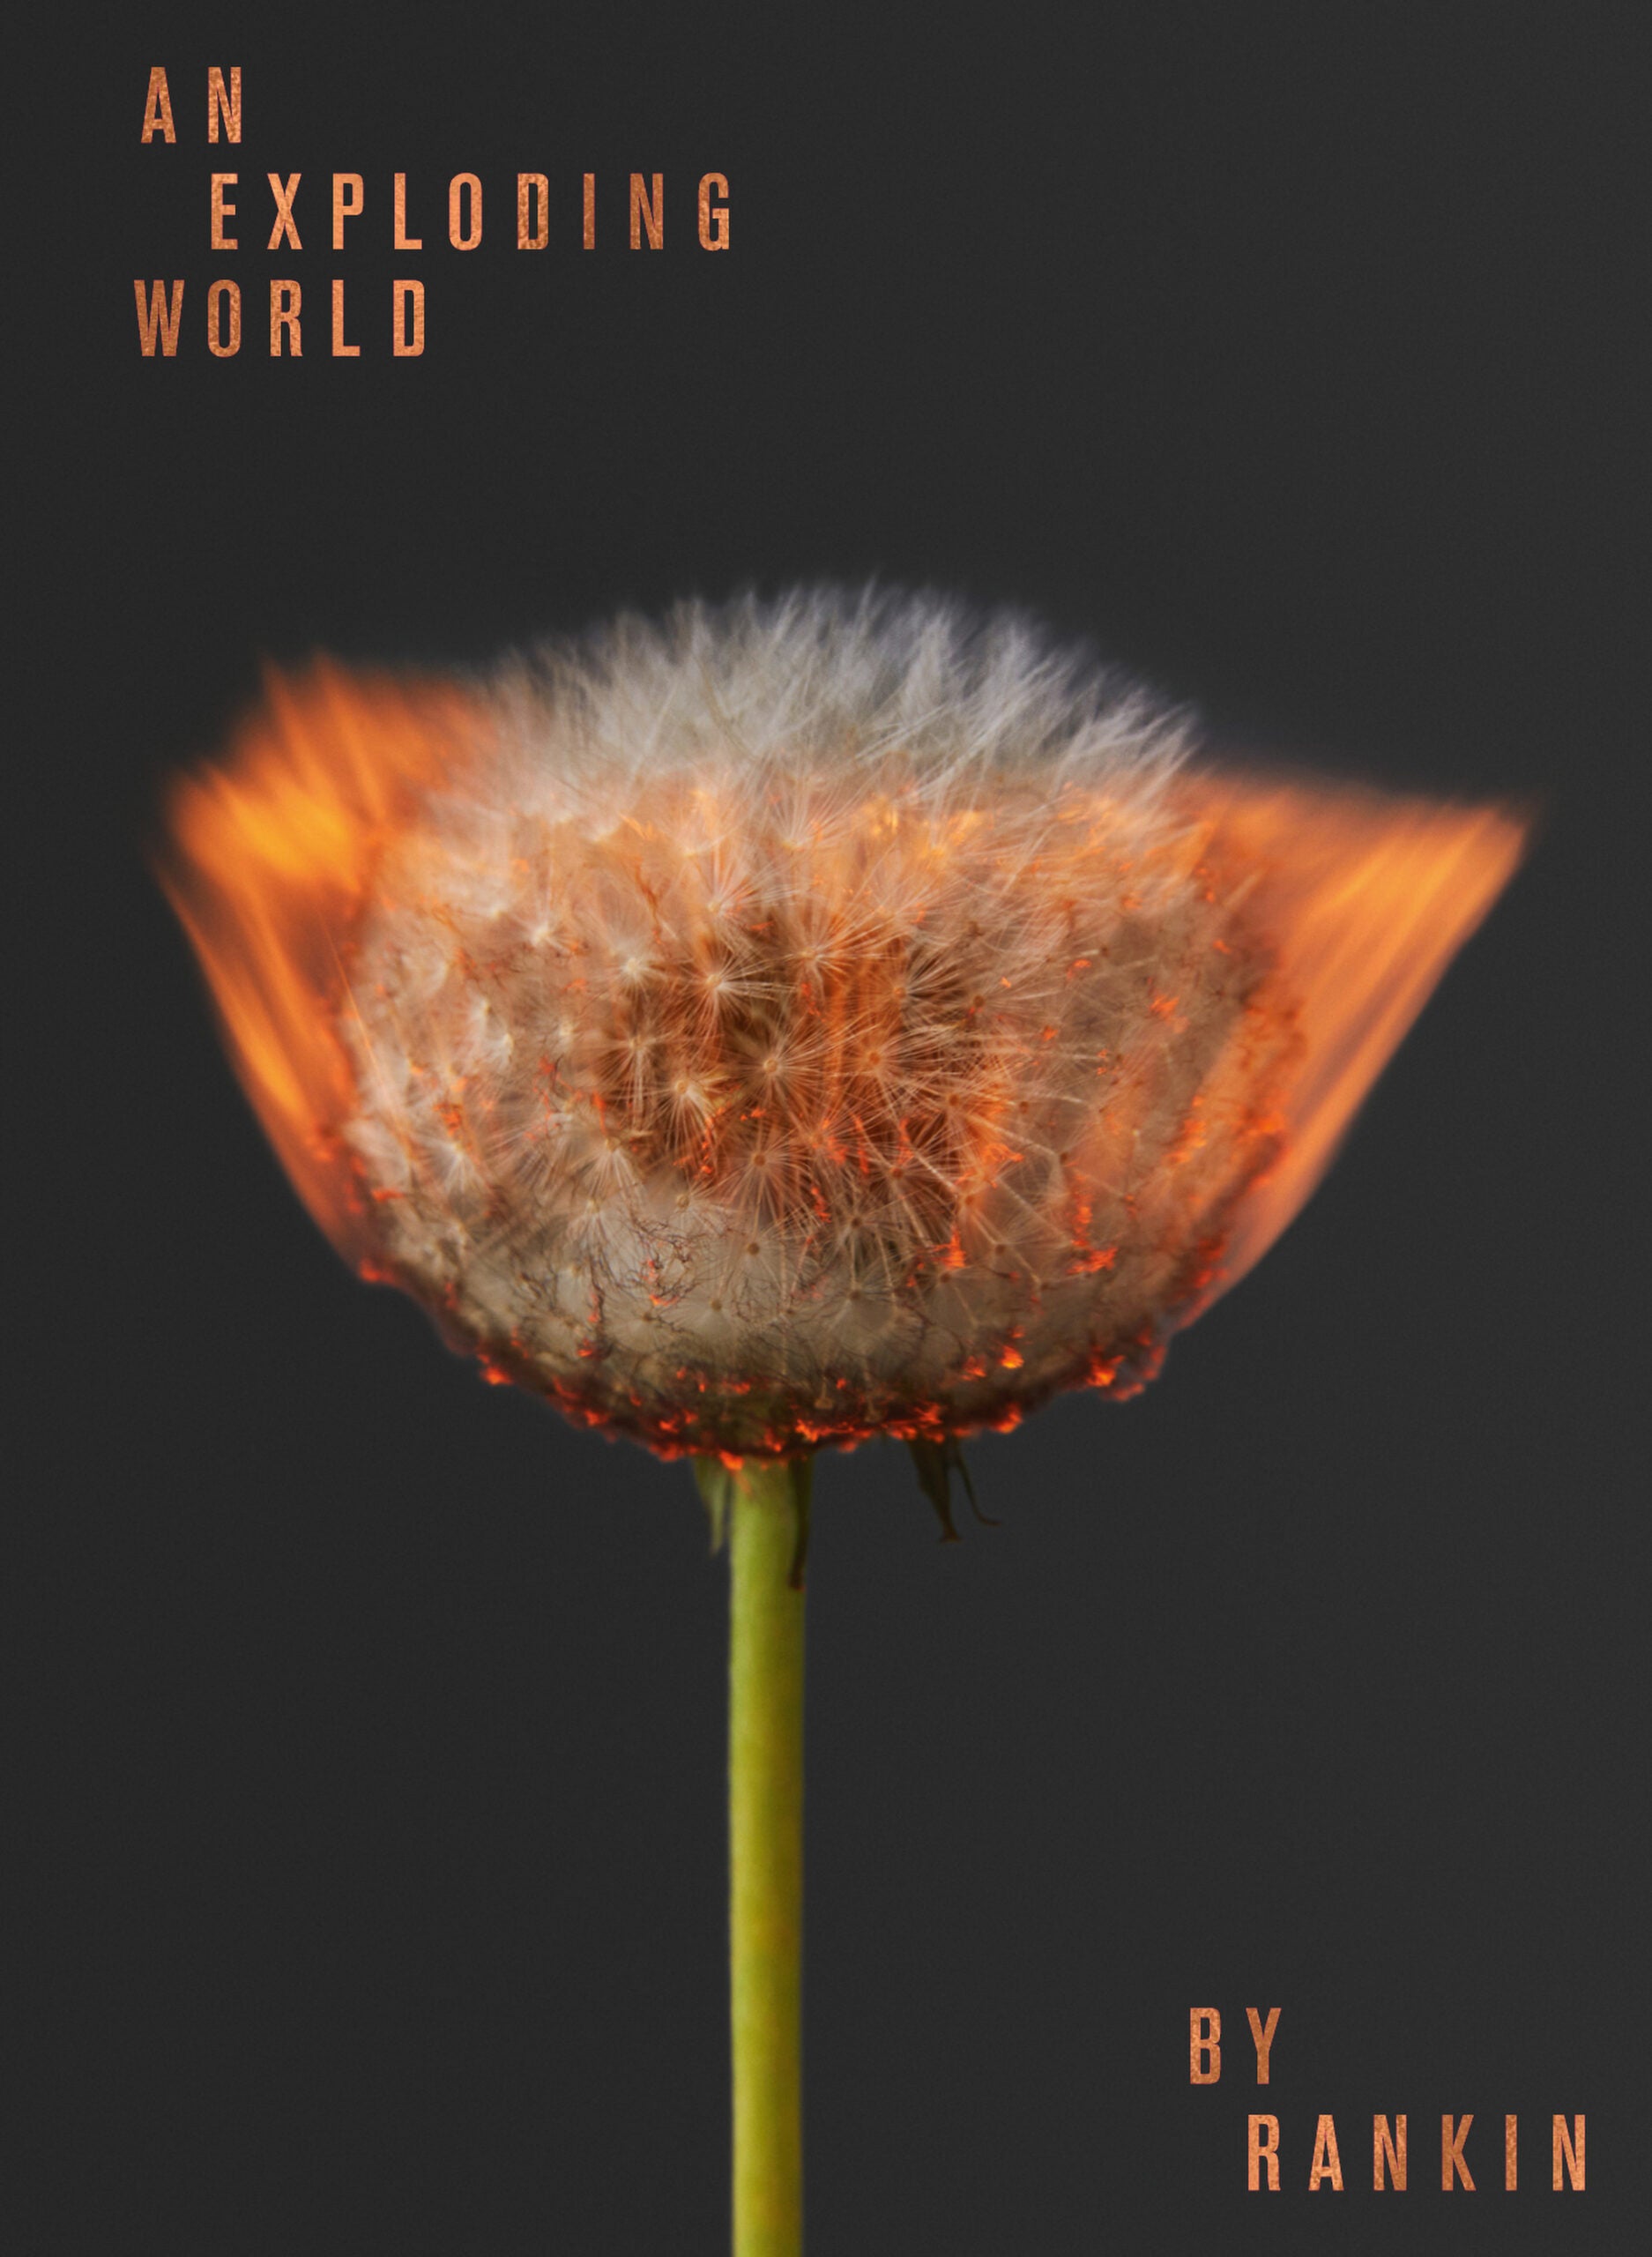  Rankin's new book, Exploding World.